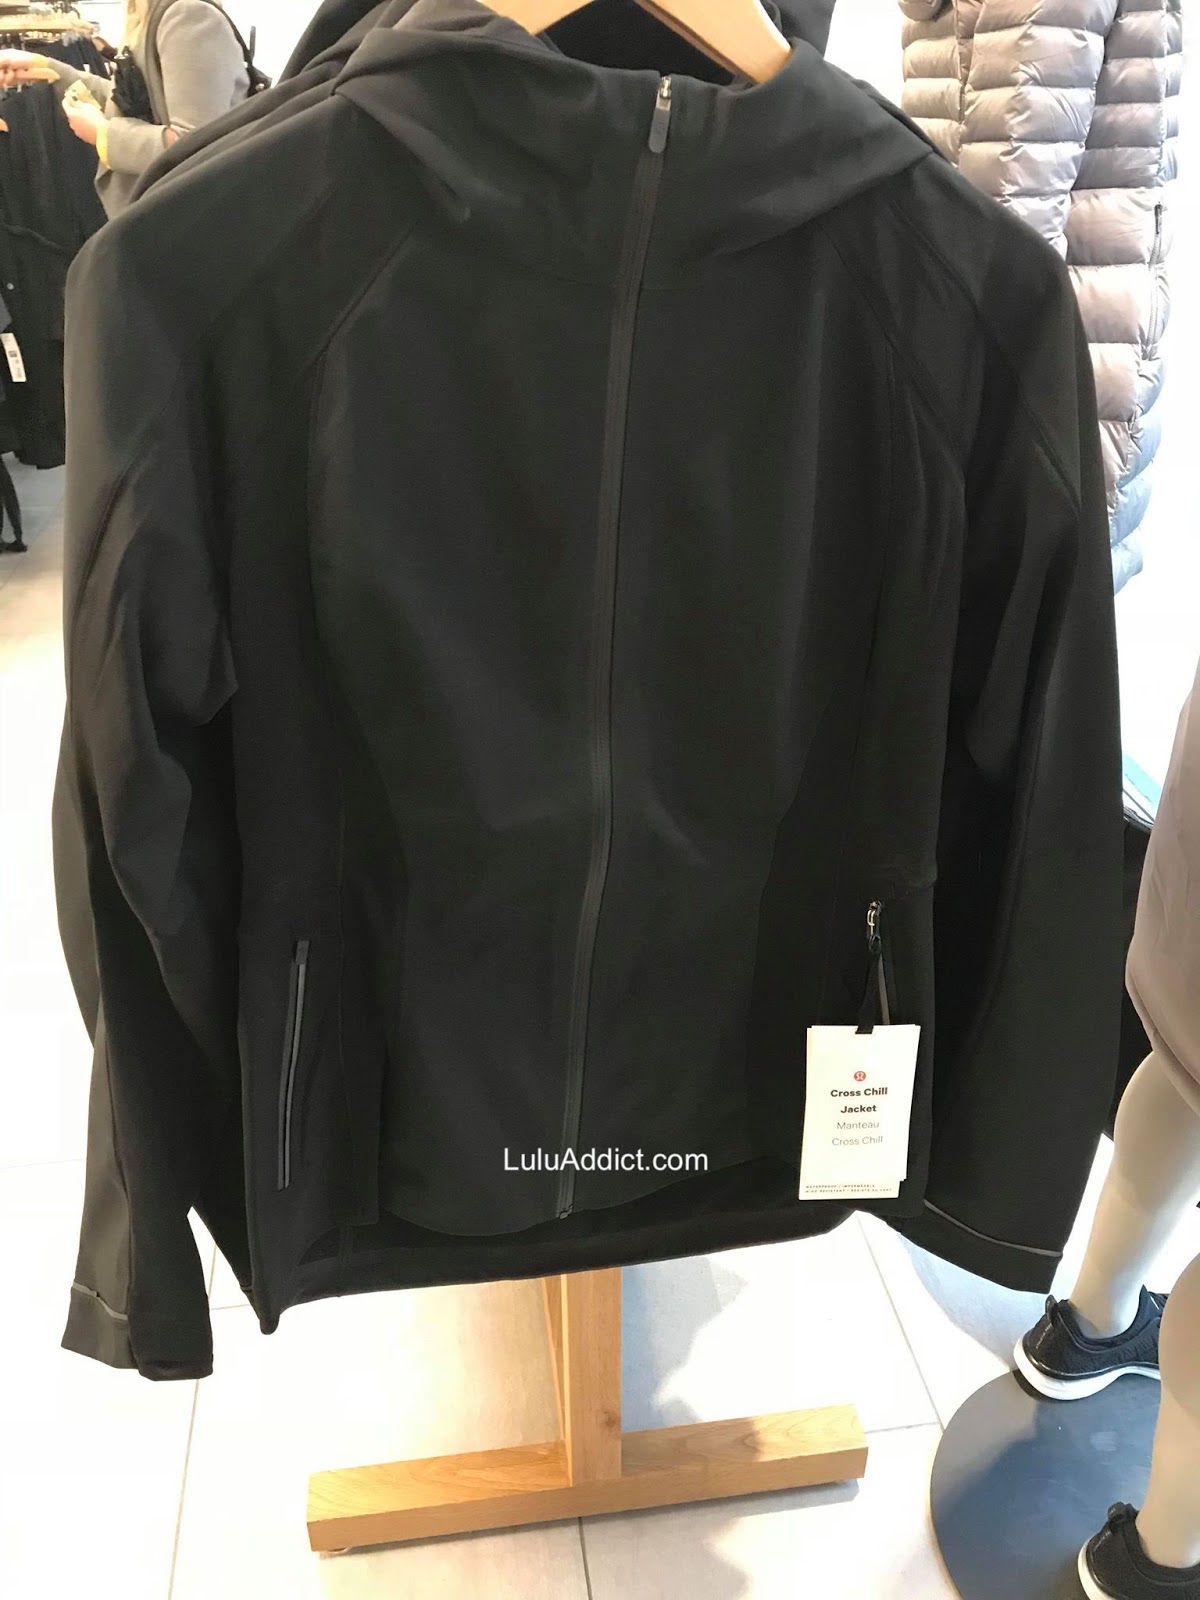 lululemon cross chill jacket review